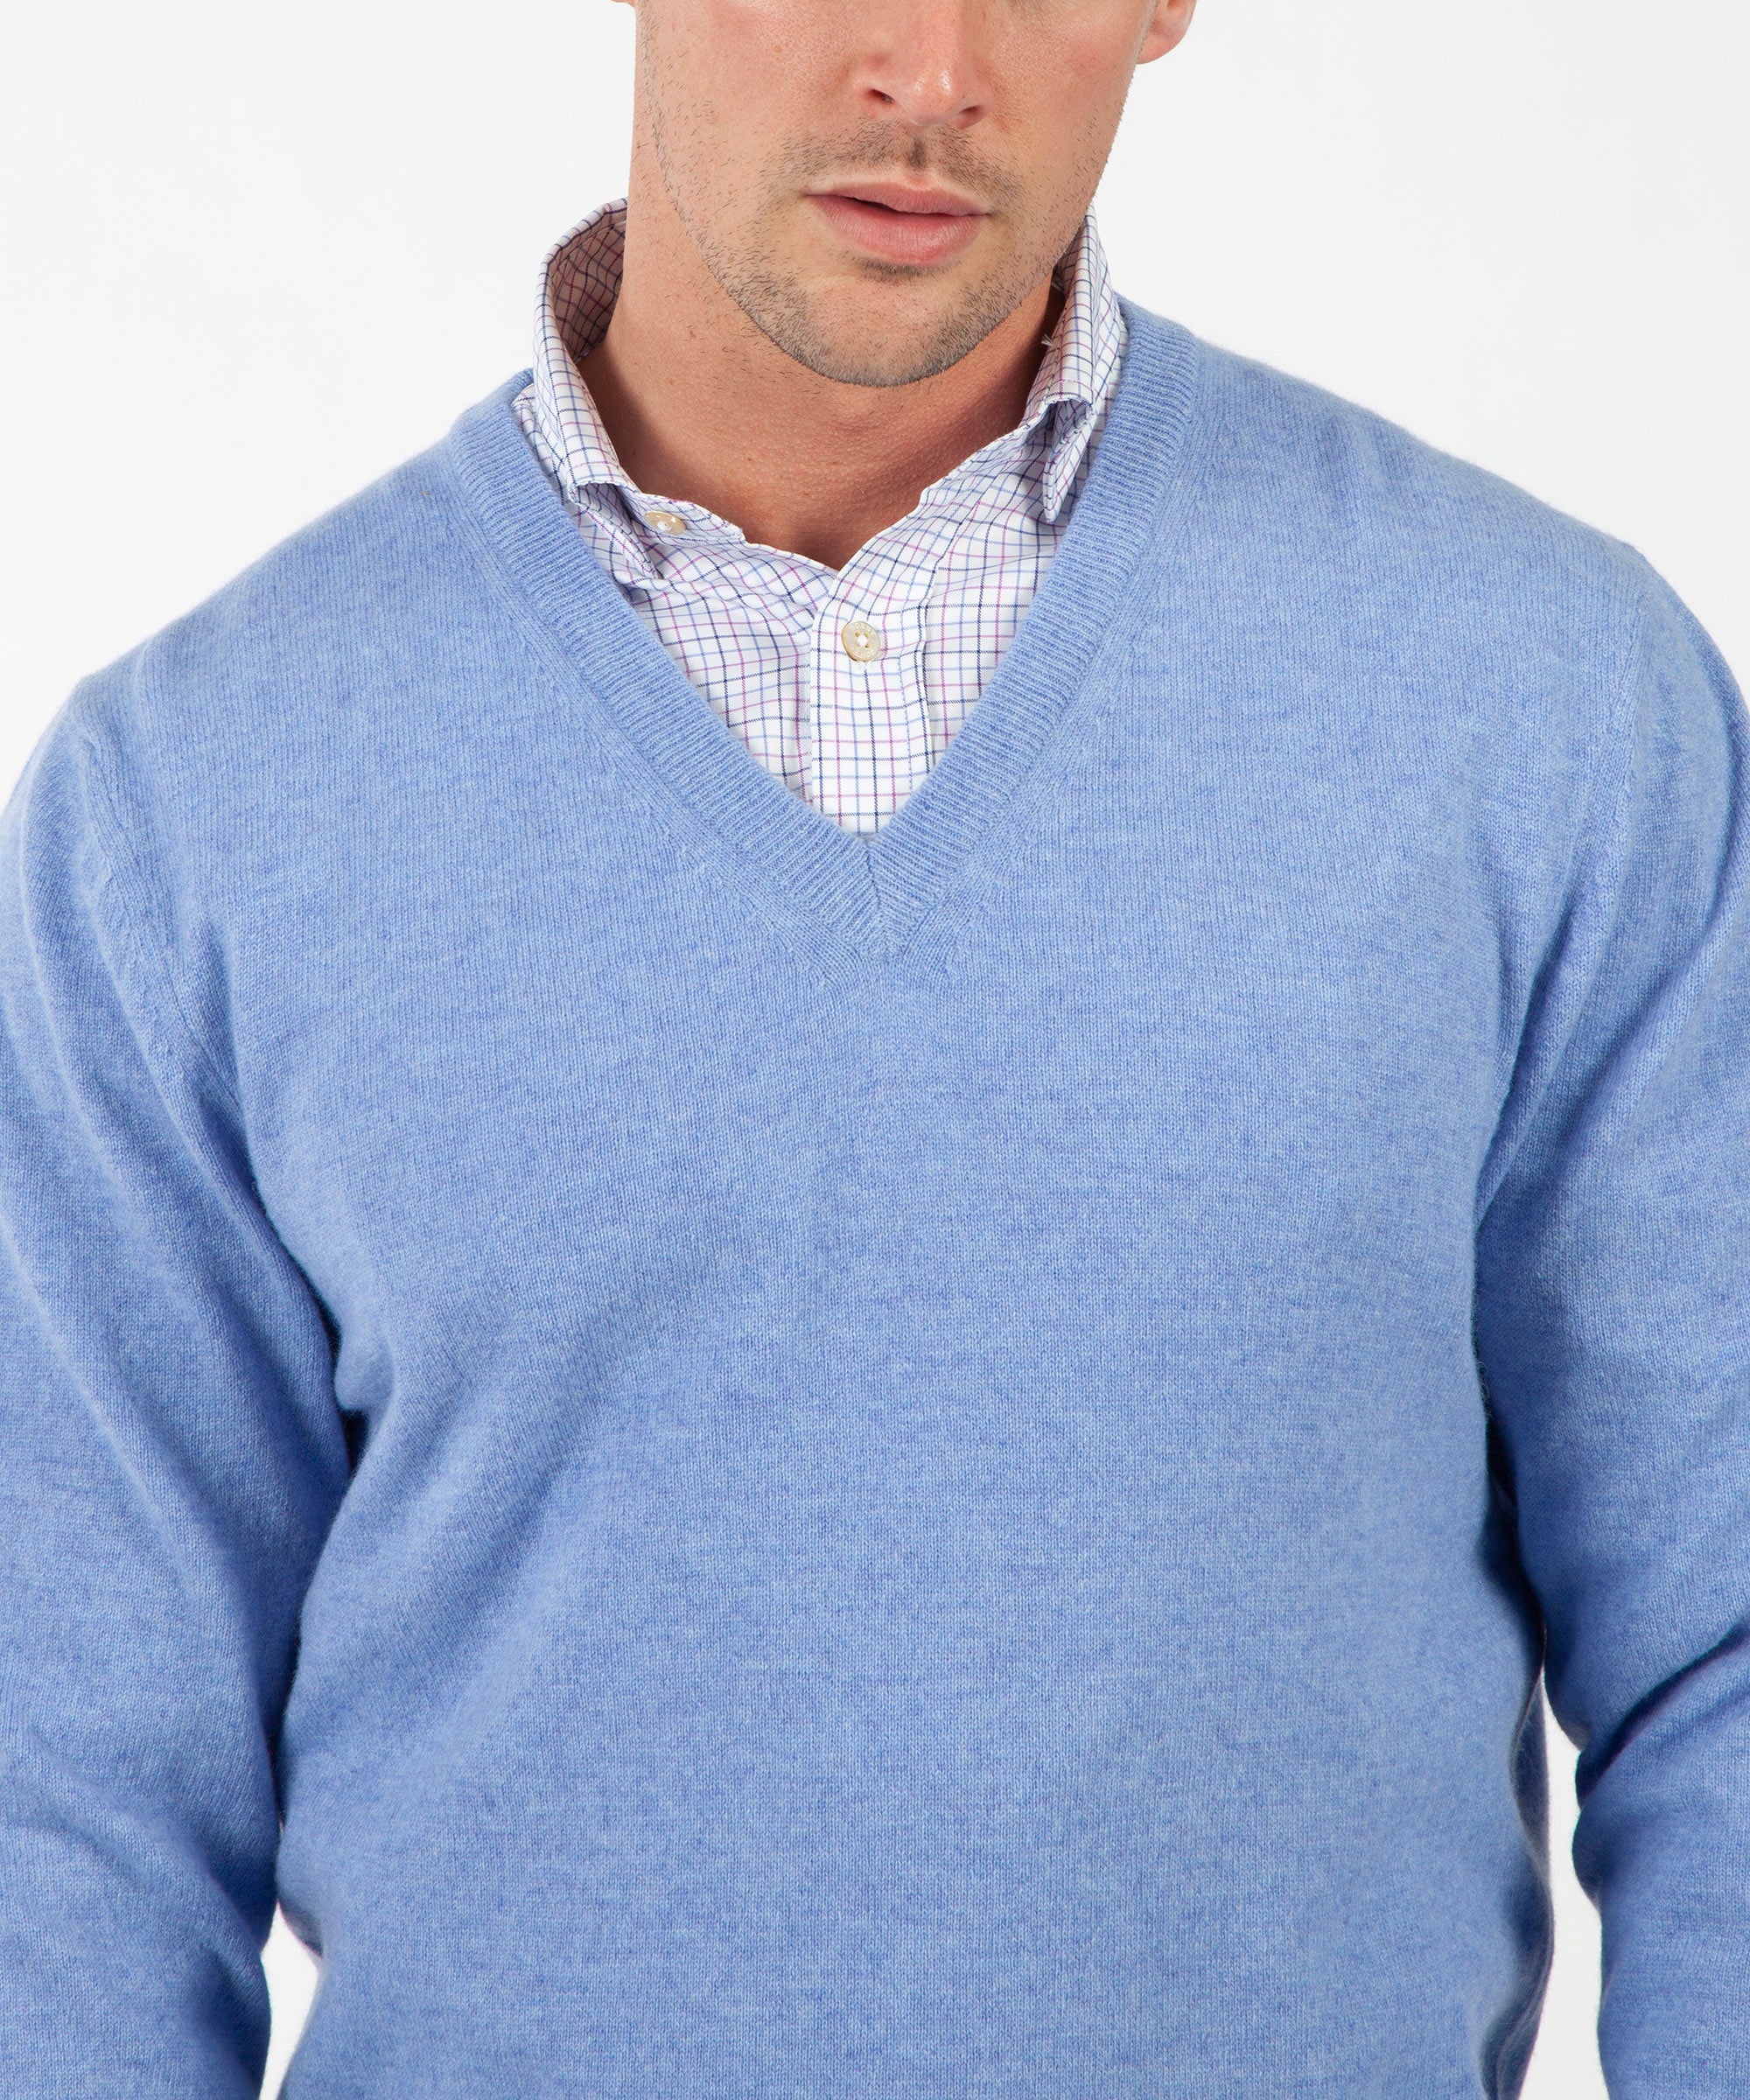 Lt Grey Men's 100% Cashmere Long Sleeve Pullover V Neck Sweater